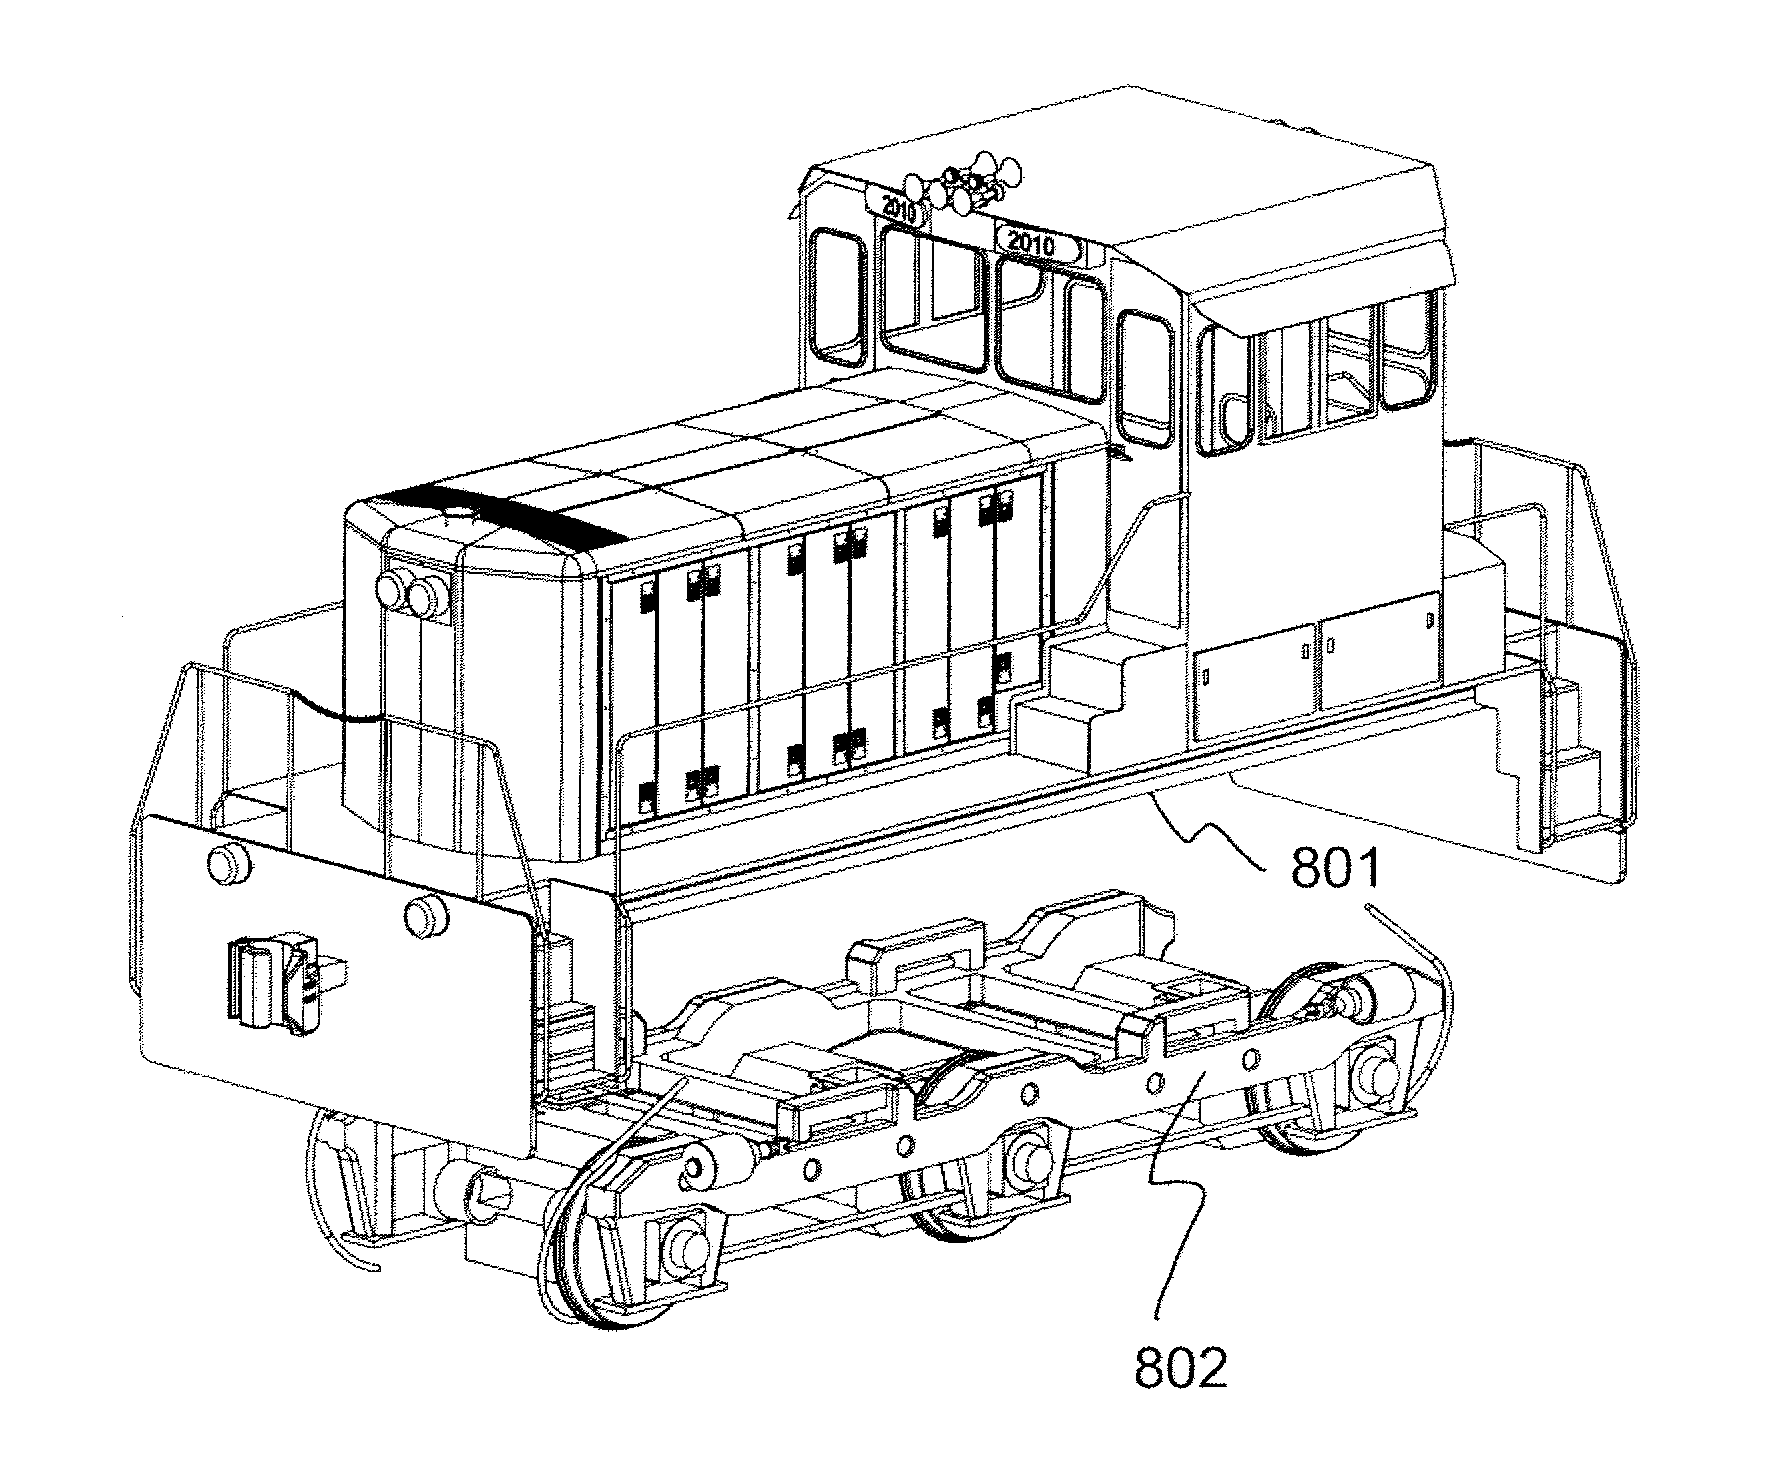 Industrial locomotive construction